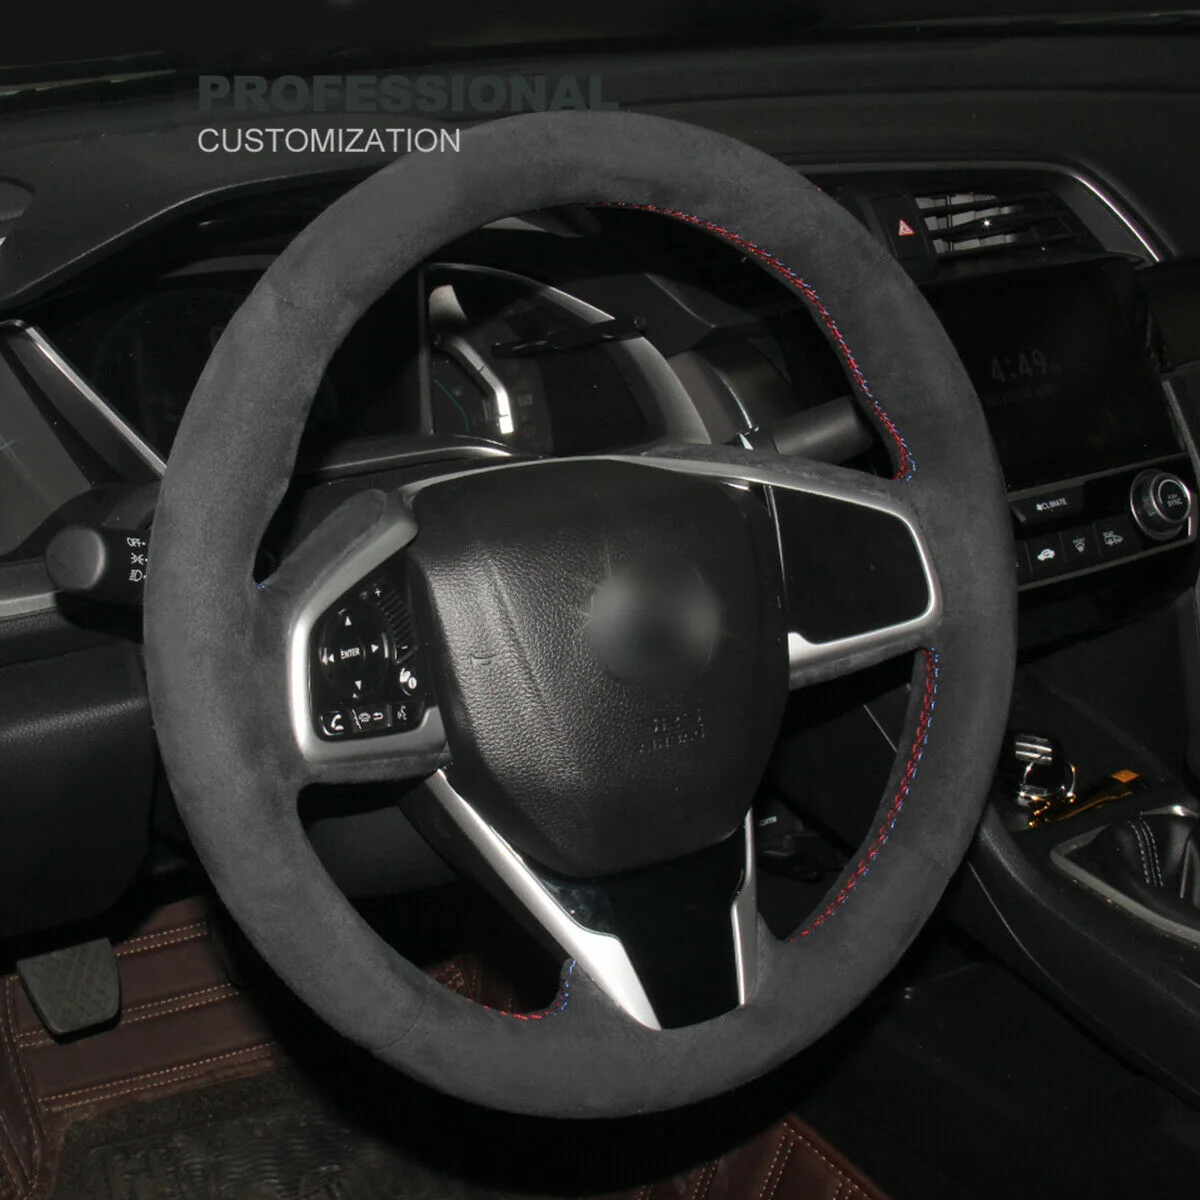 DIY תפר יד שחור זמש המכונית כיסוי גלגל הגה עבור הונדה סיוויק 10 CRV-CR-V בהירות אביזרי רכב - 2